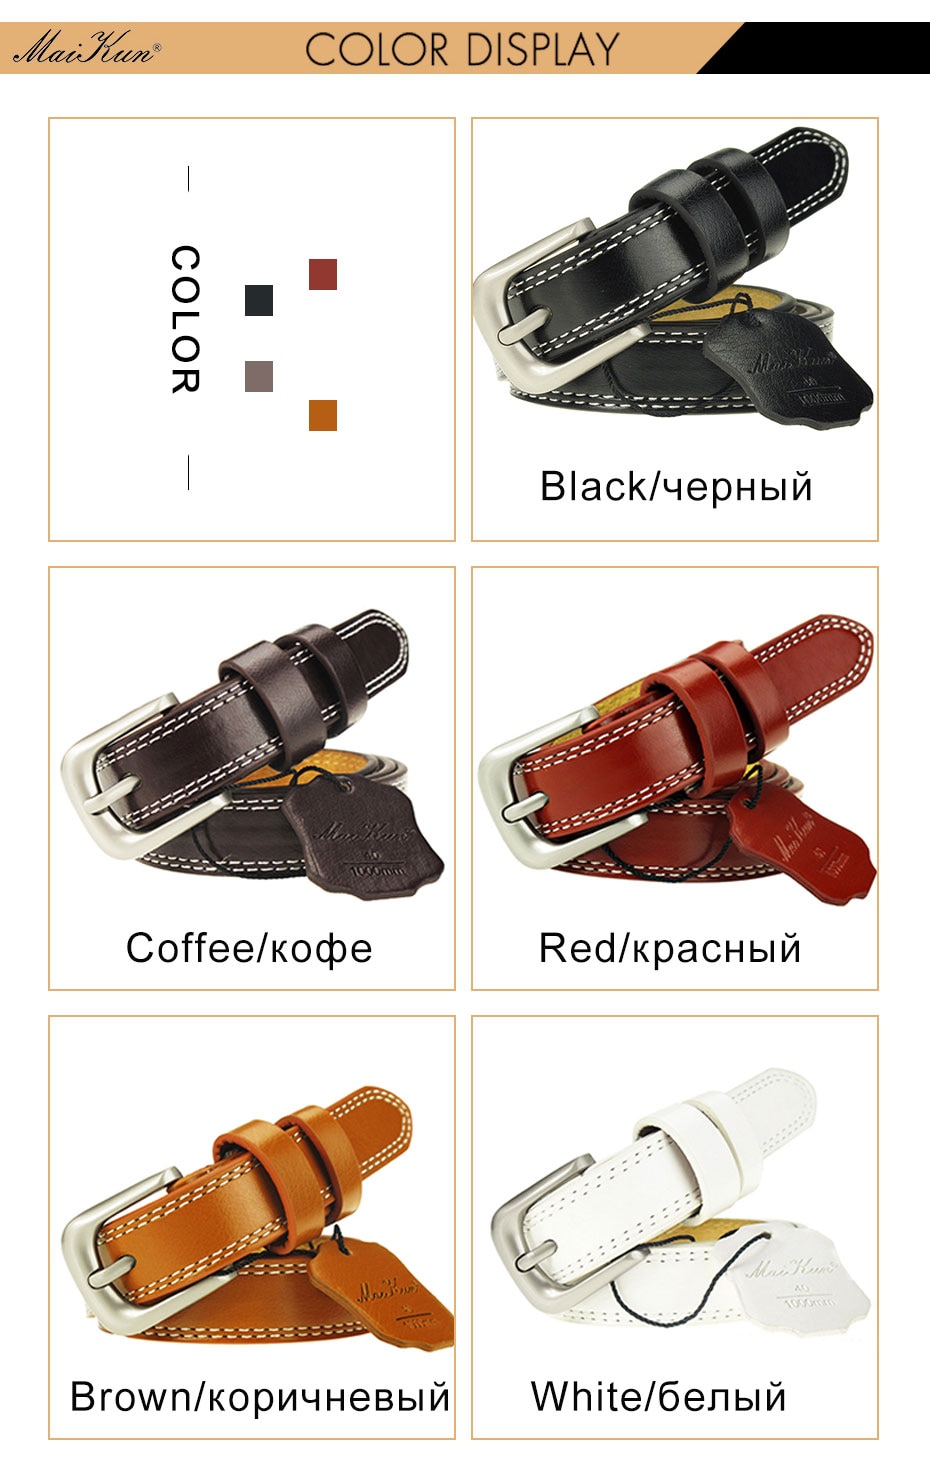 Top-Quality-Cowskin-Leather-Belts-for-Women-Cummerbund-Luxury-Female-Belt-Decorative-Simple-Waist-Be-32842042948